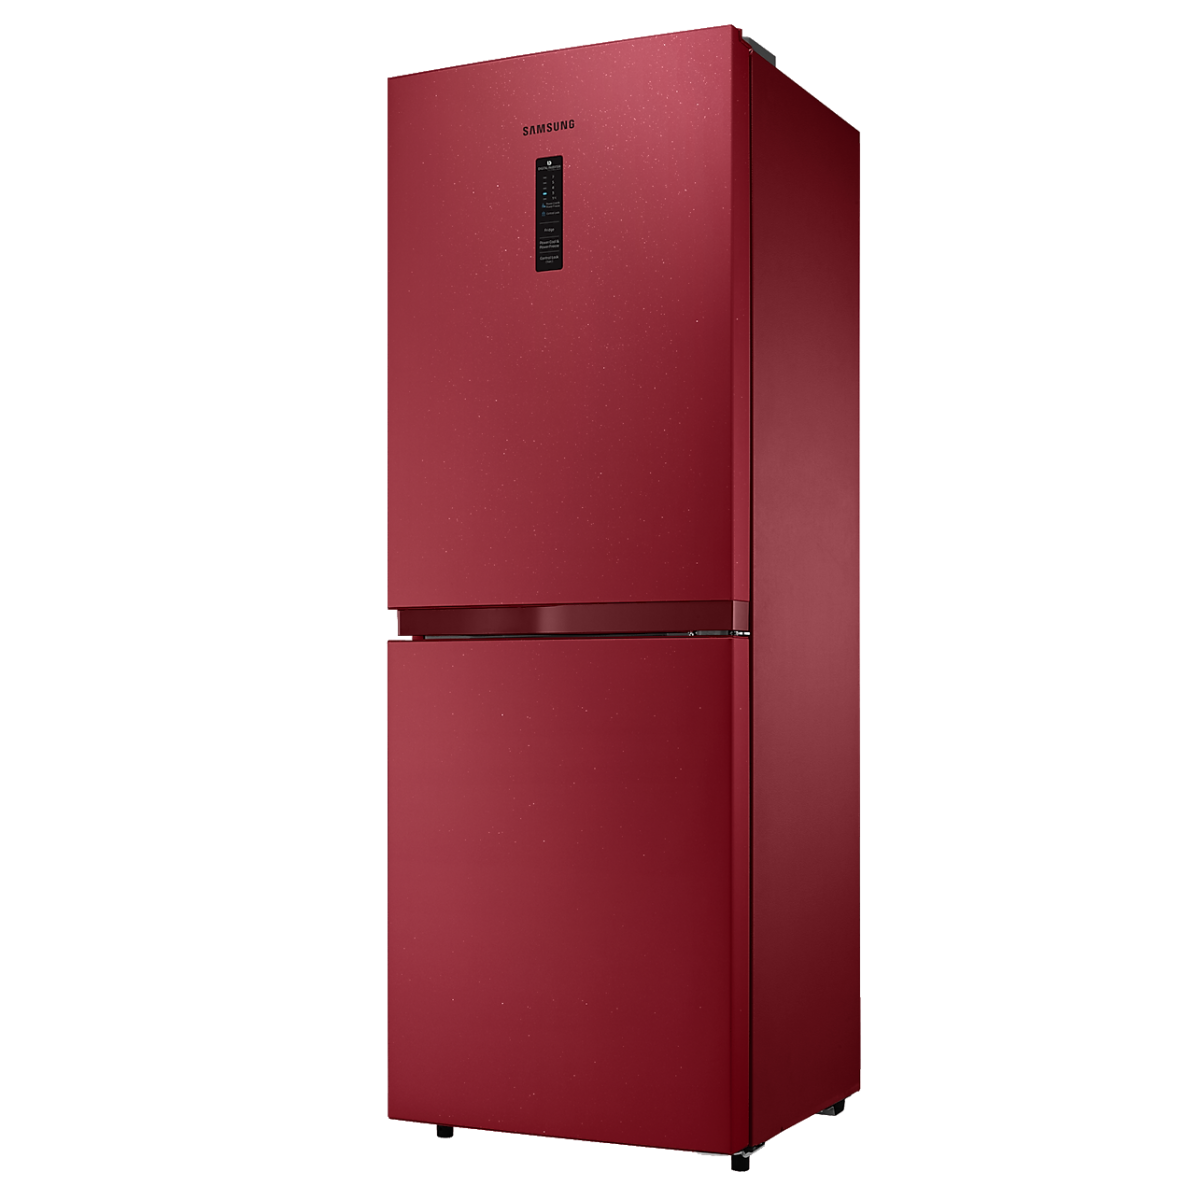 SAMSUNG 218 Liter Refrigerator with Digtial Inverter Technology RB21KMFH5RH/D3 , Best Refrigerators of Year, Top-rated Refrigerators, Refrigerator Reviews, Refrigerator Comparison, Buying a Refrigerator Guide, Refrigerator Deals and Offers Best Refrigerators of Year, Top-rated Refrigerators, Refrigerator Reviews, Refrigerator Comparison, Buying a Refrigerator Guide, Refrigerator Deals and Offers, Best refrigerators in Chittagong, Best selling refrigerators in Chittagong, Best Electronics Store in Chittagong, Meem Electronics, MeemElectronics, Best Deal of Refrigerator, SAMSUNG Refrigerator price in Chittagong, SAMSUNG Refrigerator price in Bangladersh, 218 Liter Refrigerator, SAMSUNG Refrigerator, 01919382008, 01919382009, 019193820010